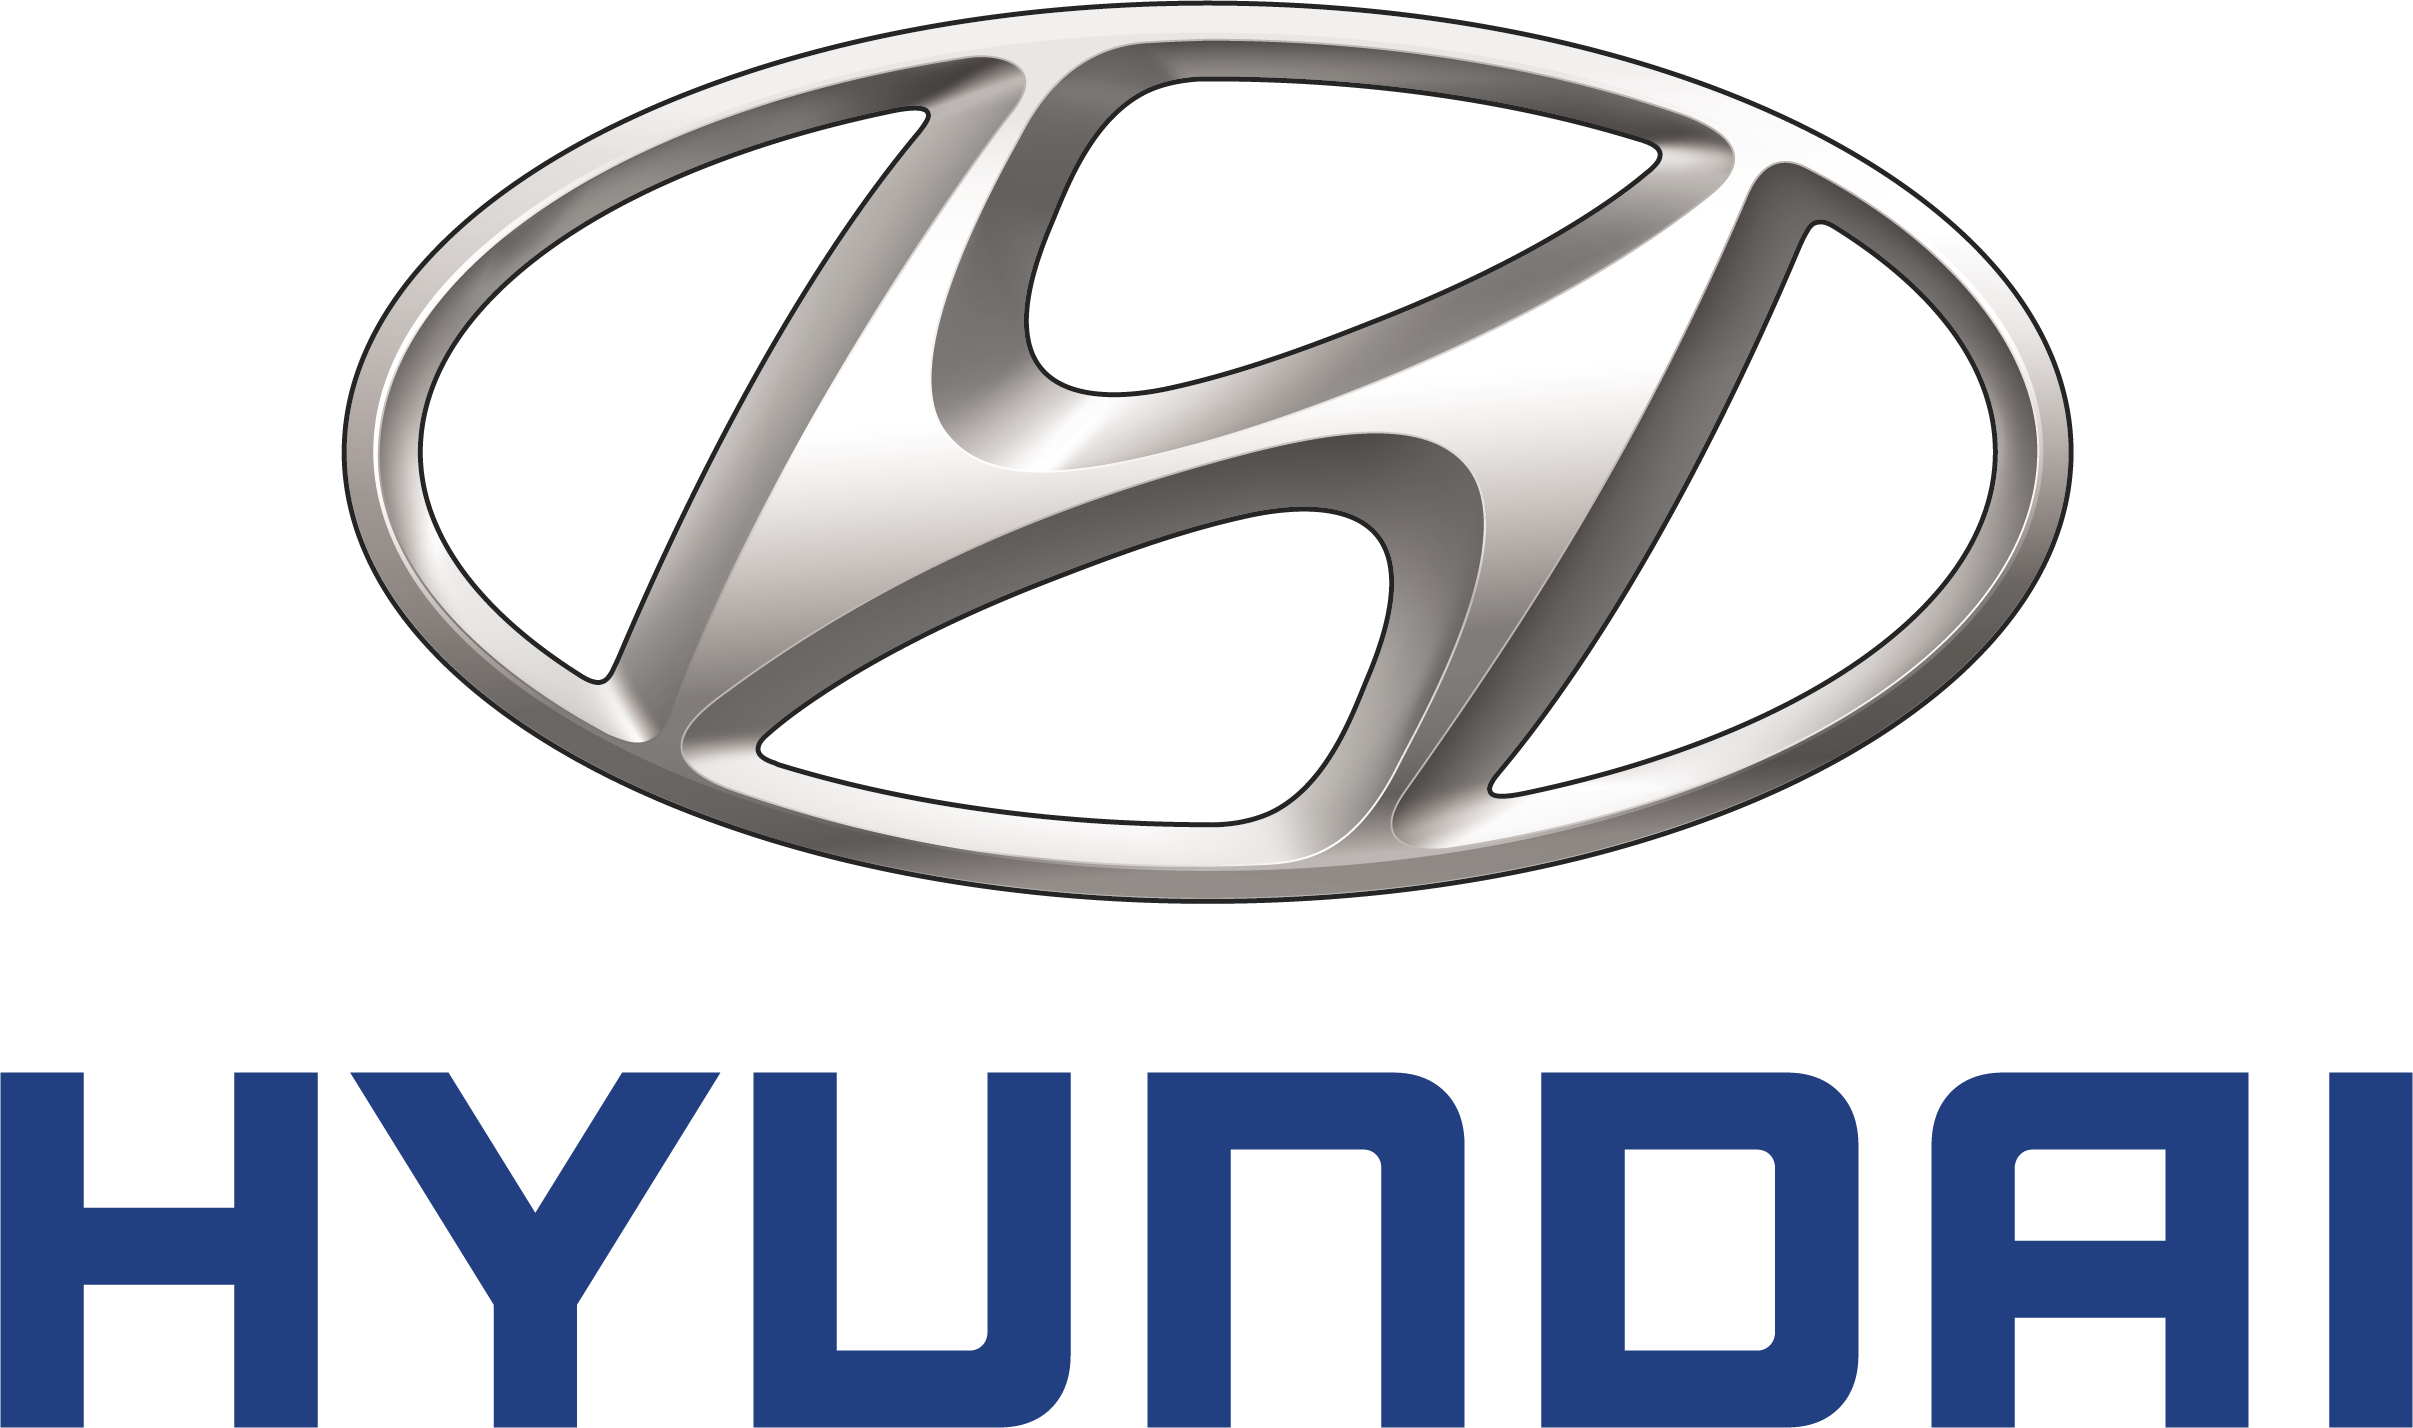 Resultado de imagen para logo hyundai